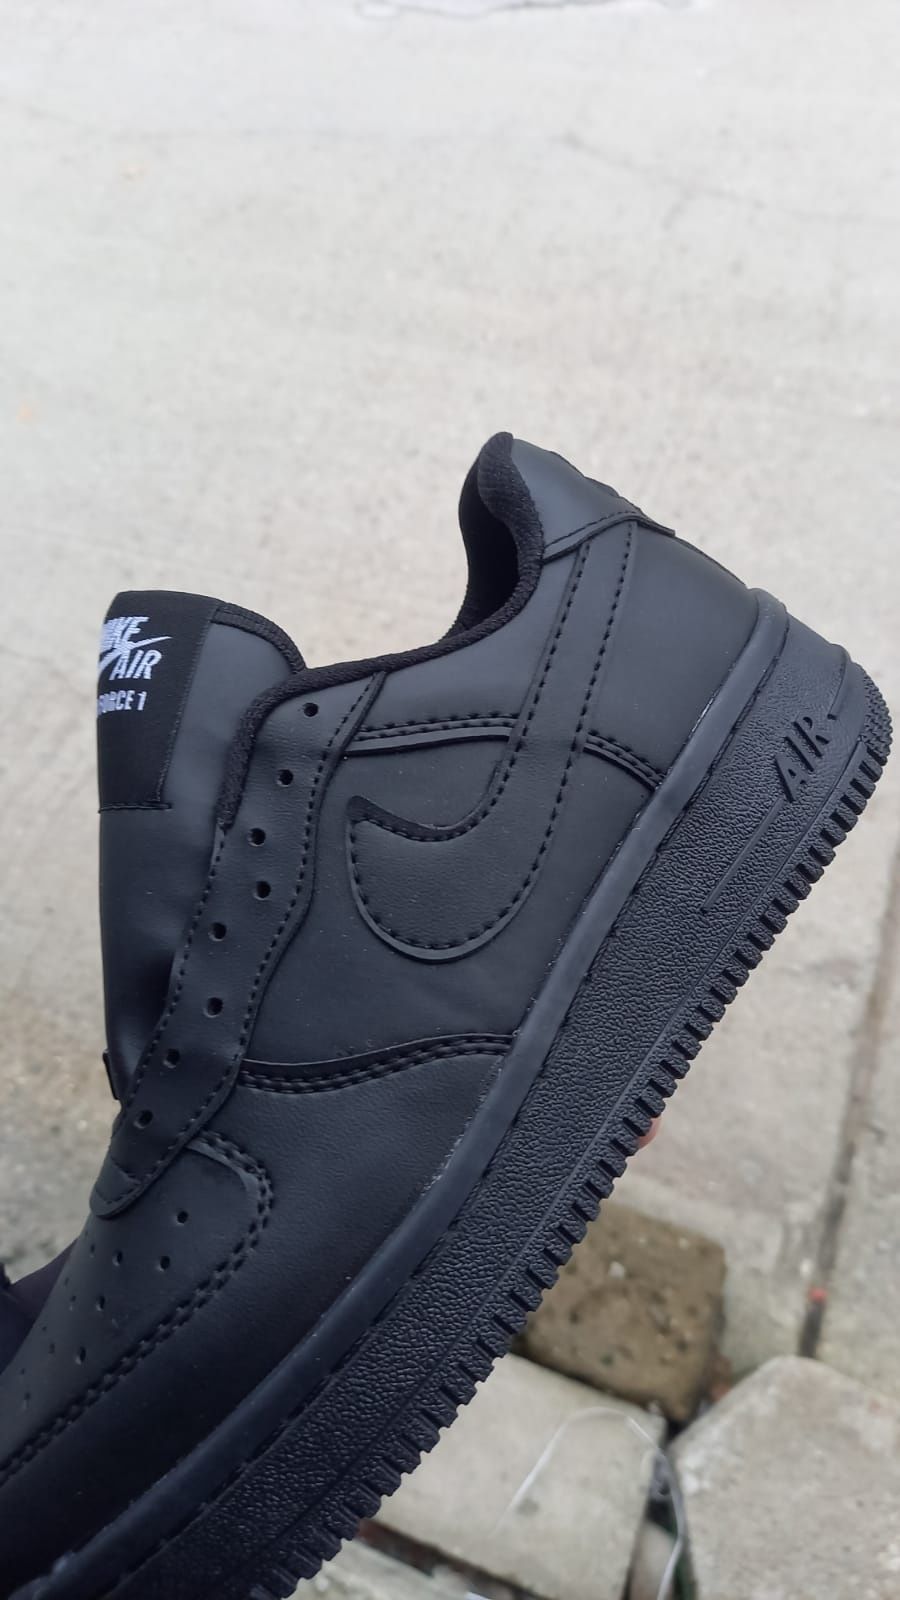 Nike Air Force 1 buty super jakość 95 zł